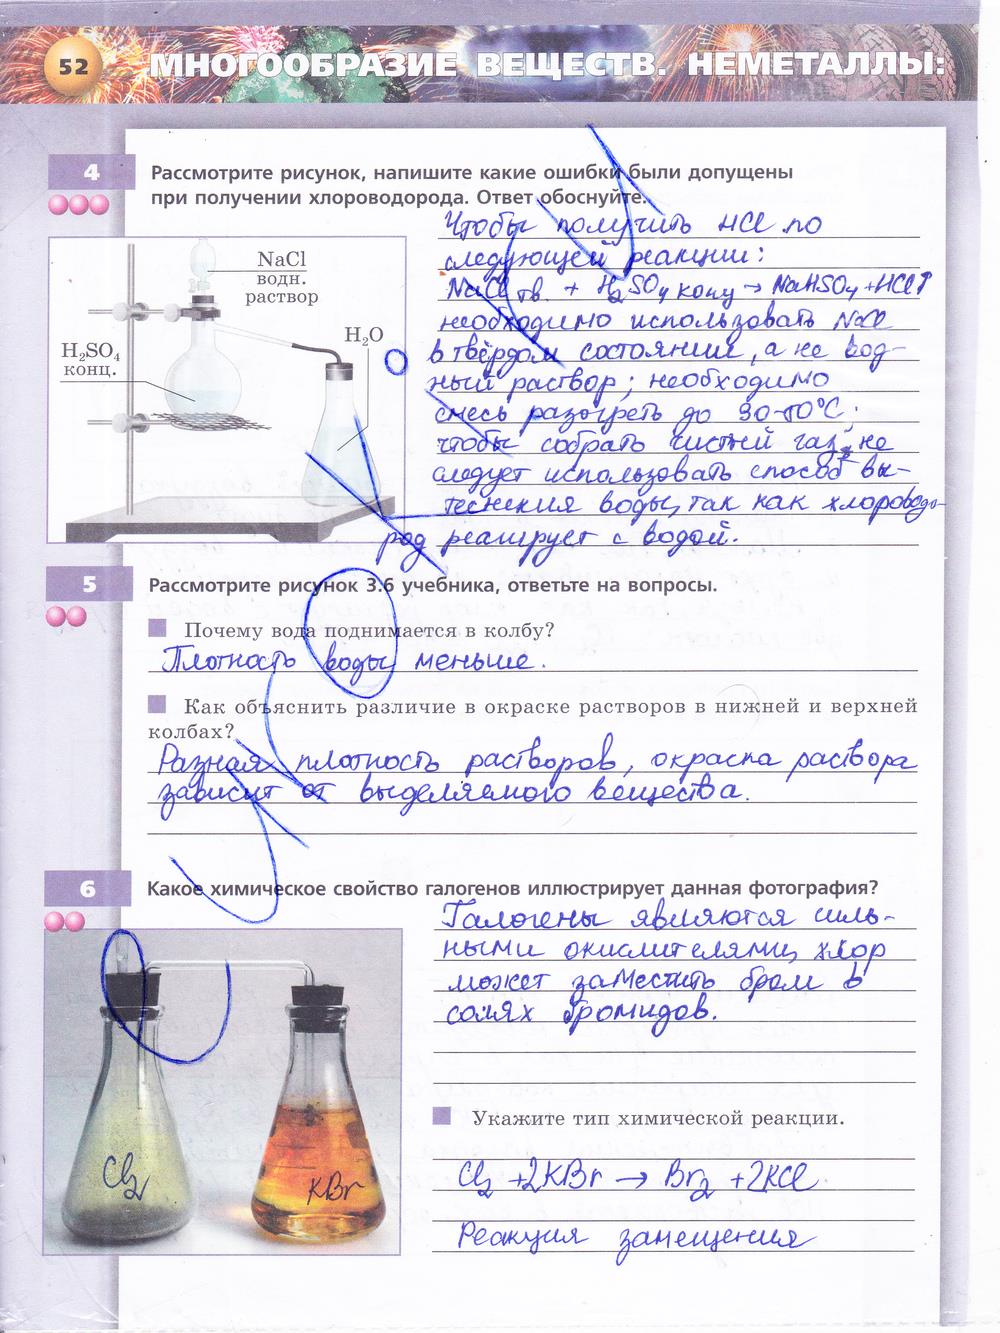 гдз 9 класс тетрадь-тренажёр страница 52 химия Гара